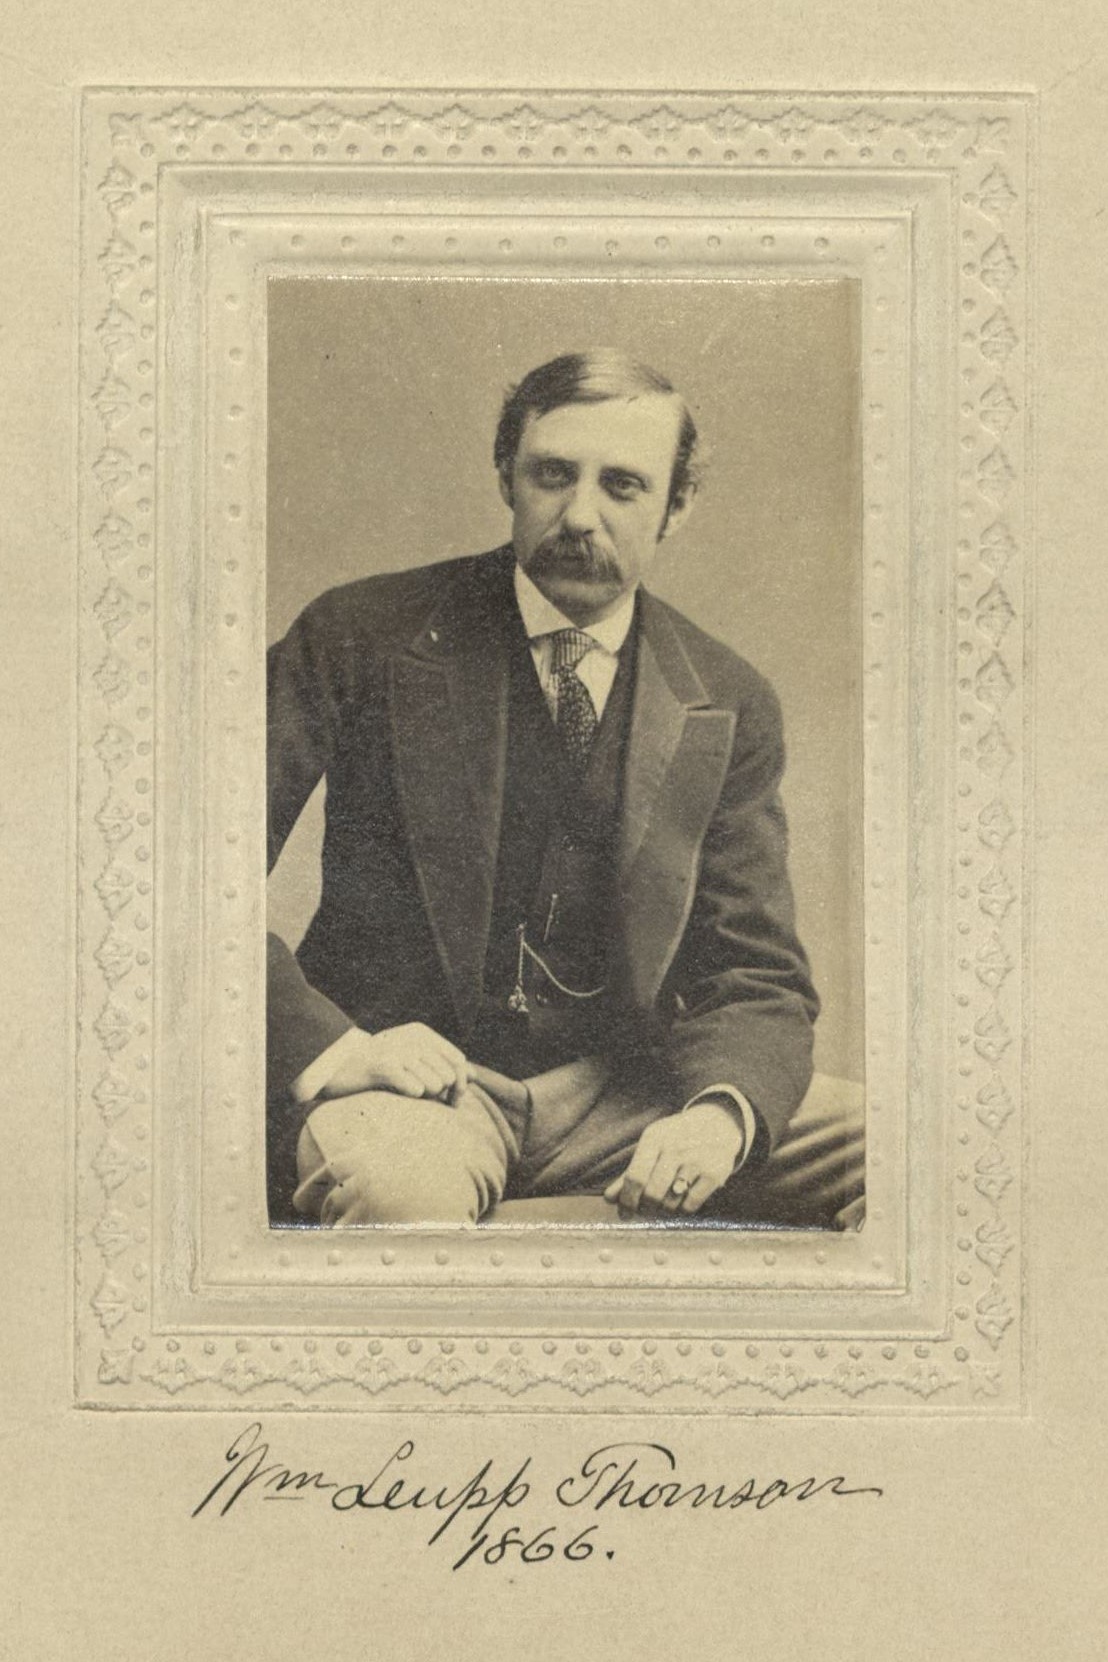 Member portrait of W. Leupp Thomson